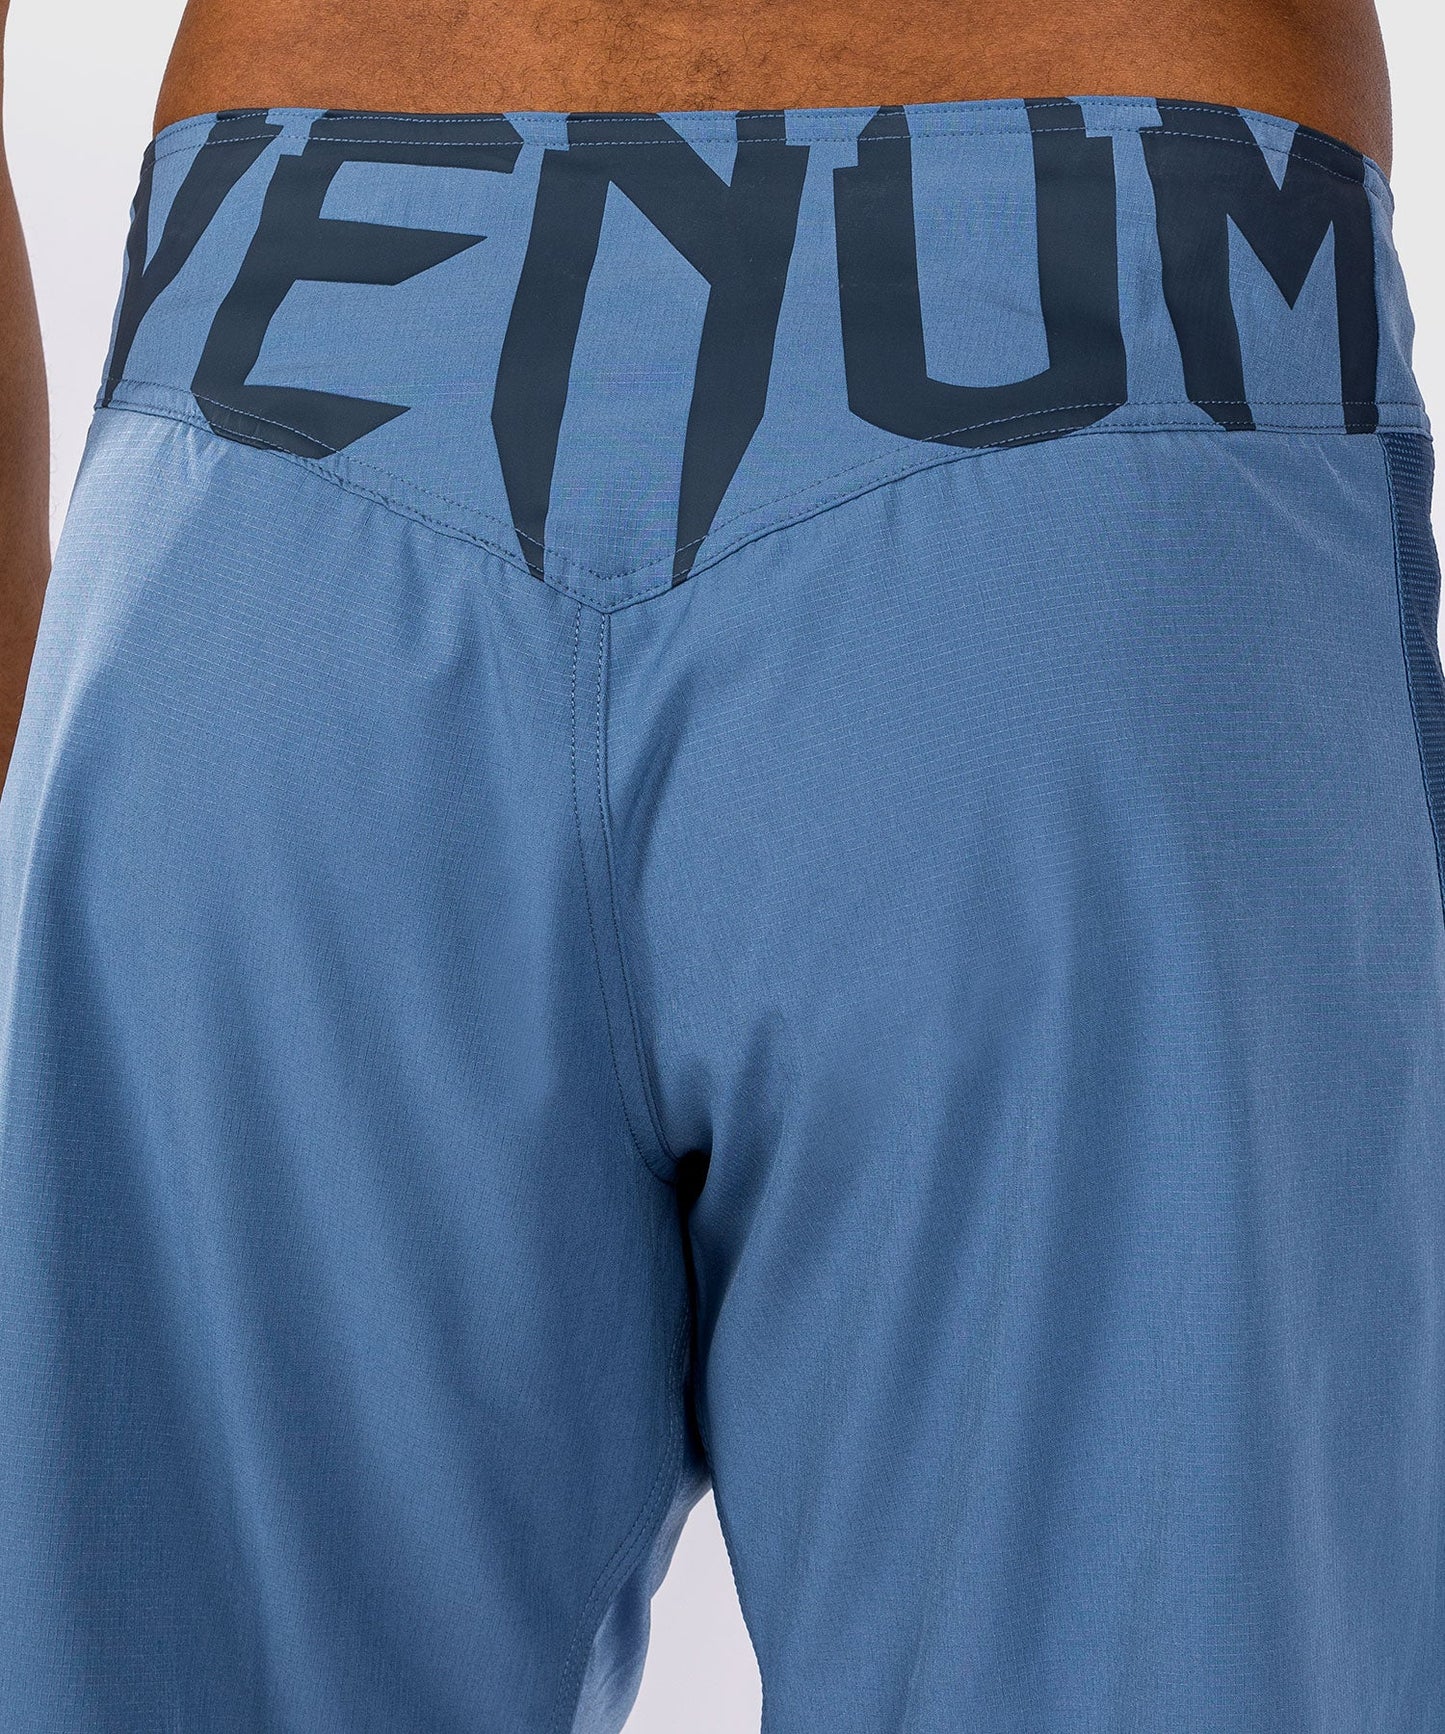 Venum Light 5.0 Fight Shorts - Blau/Weiß